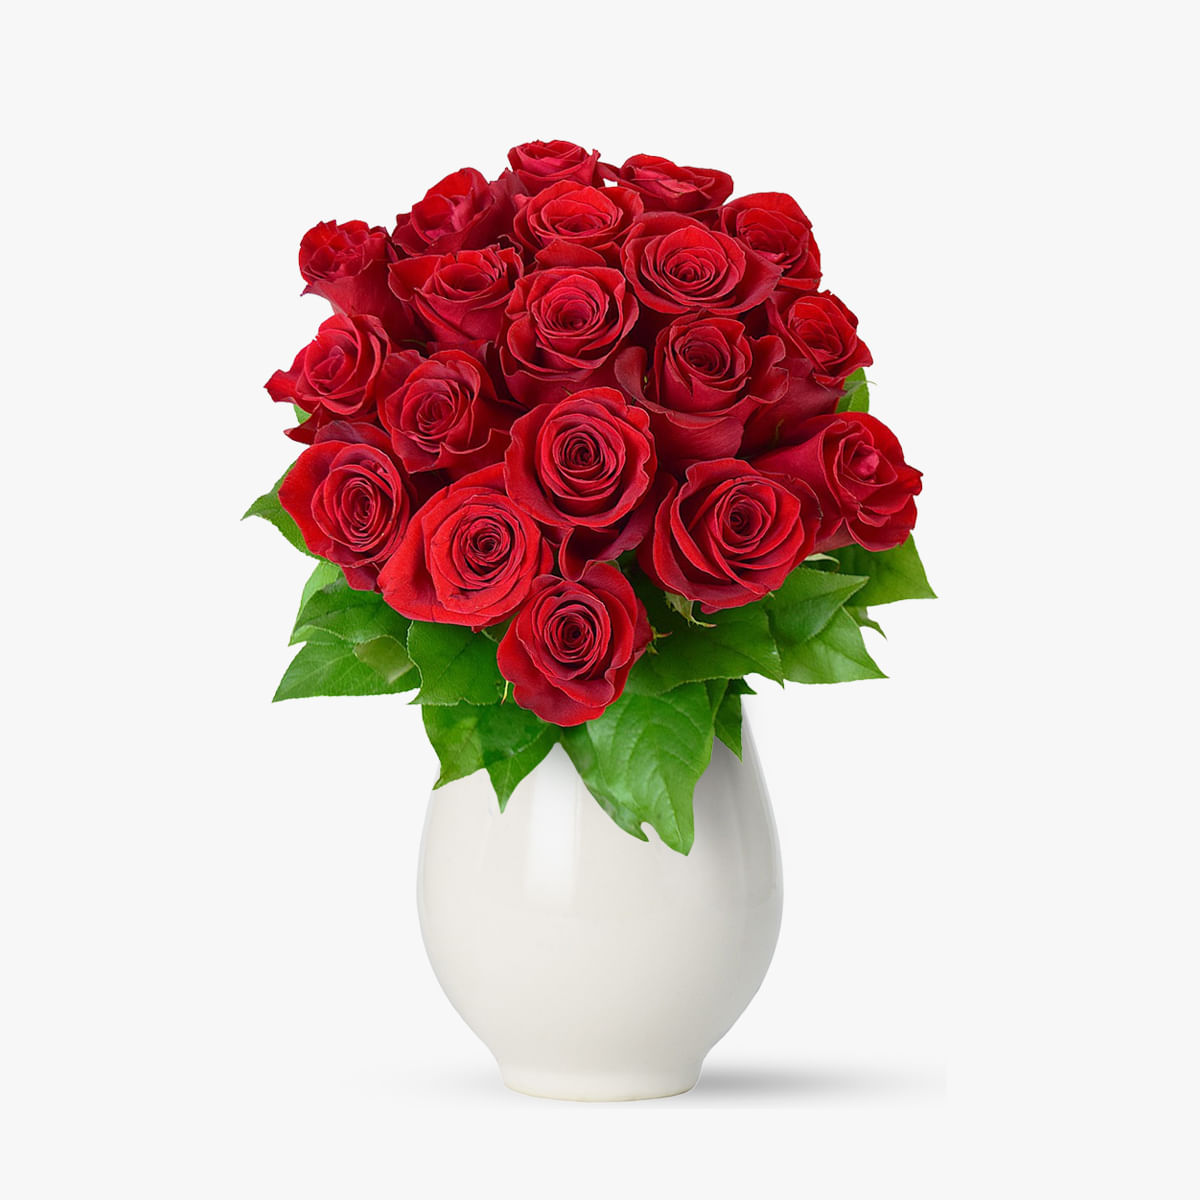 Buchet de 19 trandafiri rosii – Standard Buchet